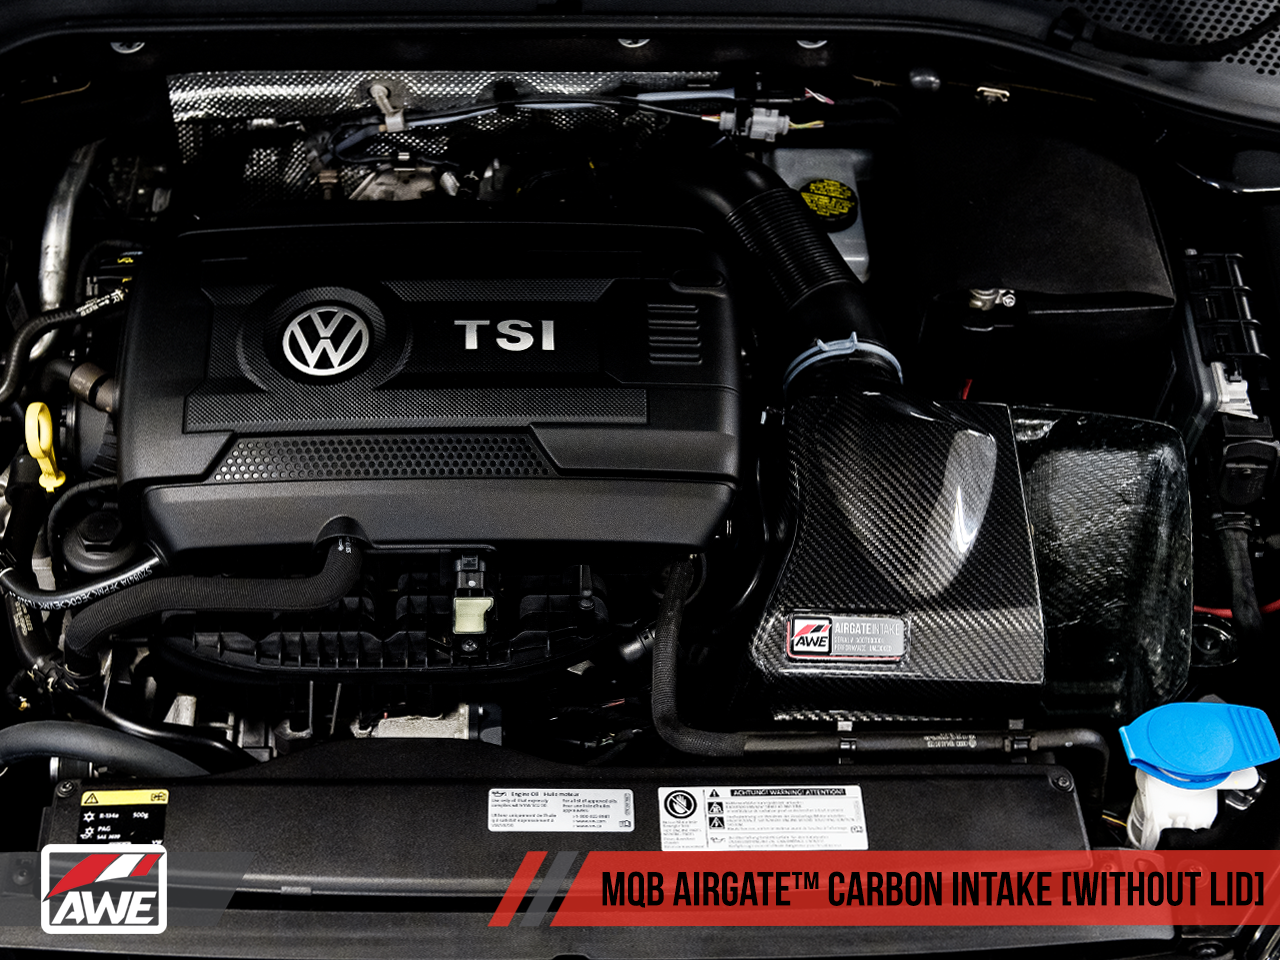 AWE AirGate™ Carbon Intake for Audi / Volkswagen MQB